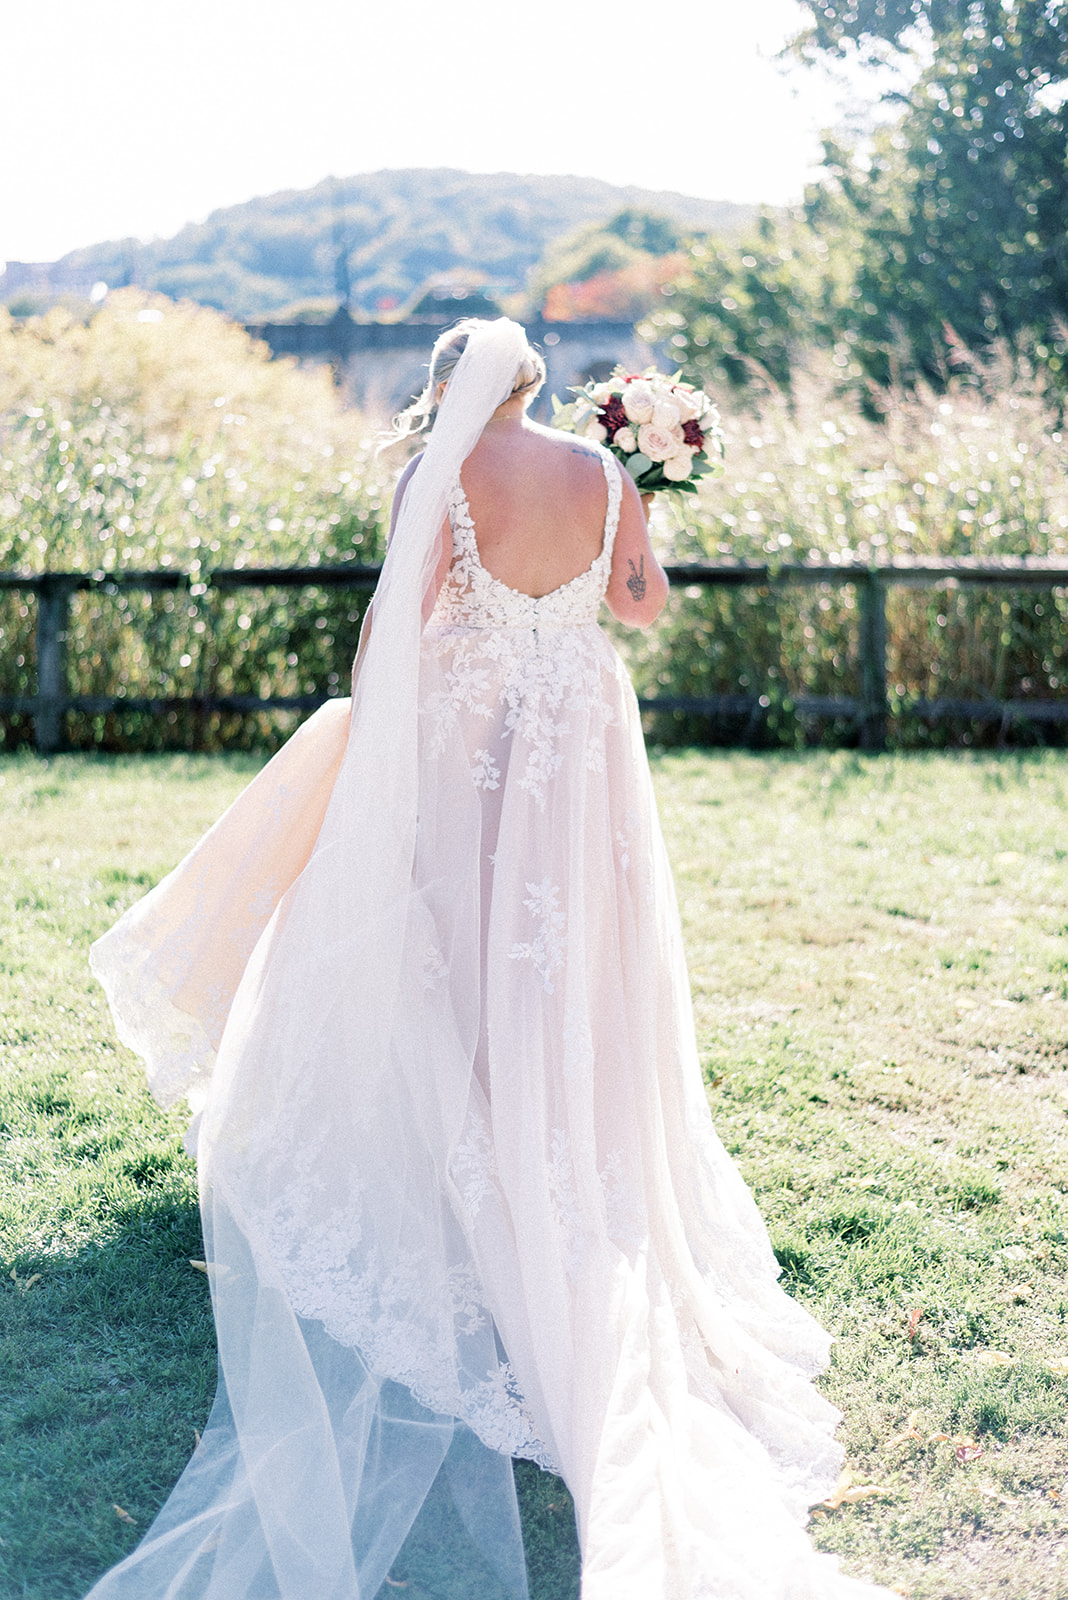 Pennsylvania wedding photographer captures bride lifting dress and bouquet as she walks